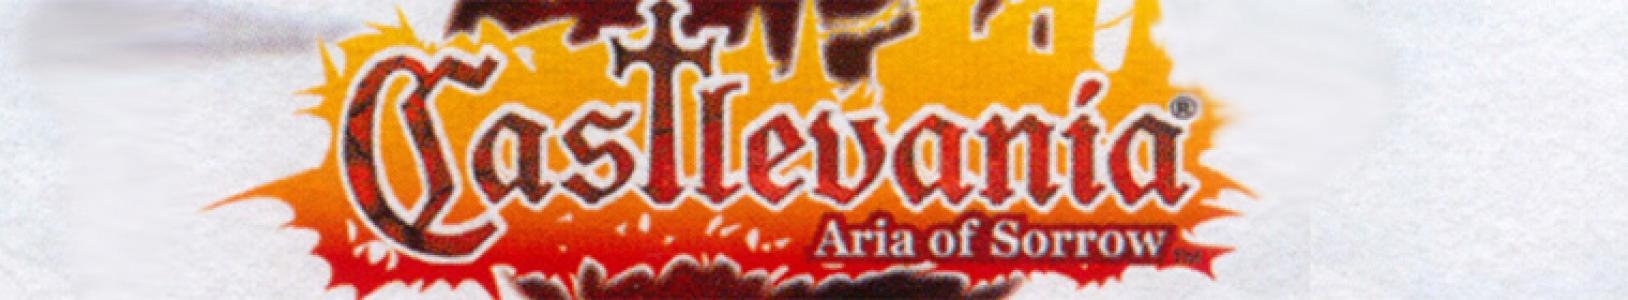 Castlevania: Aria of Sorrow banner